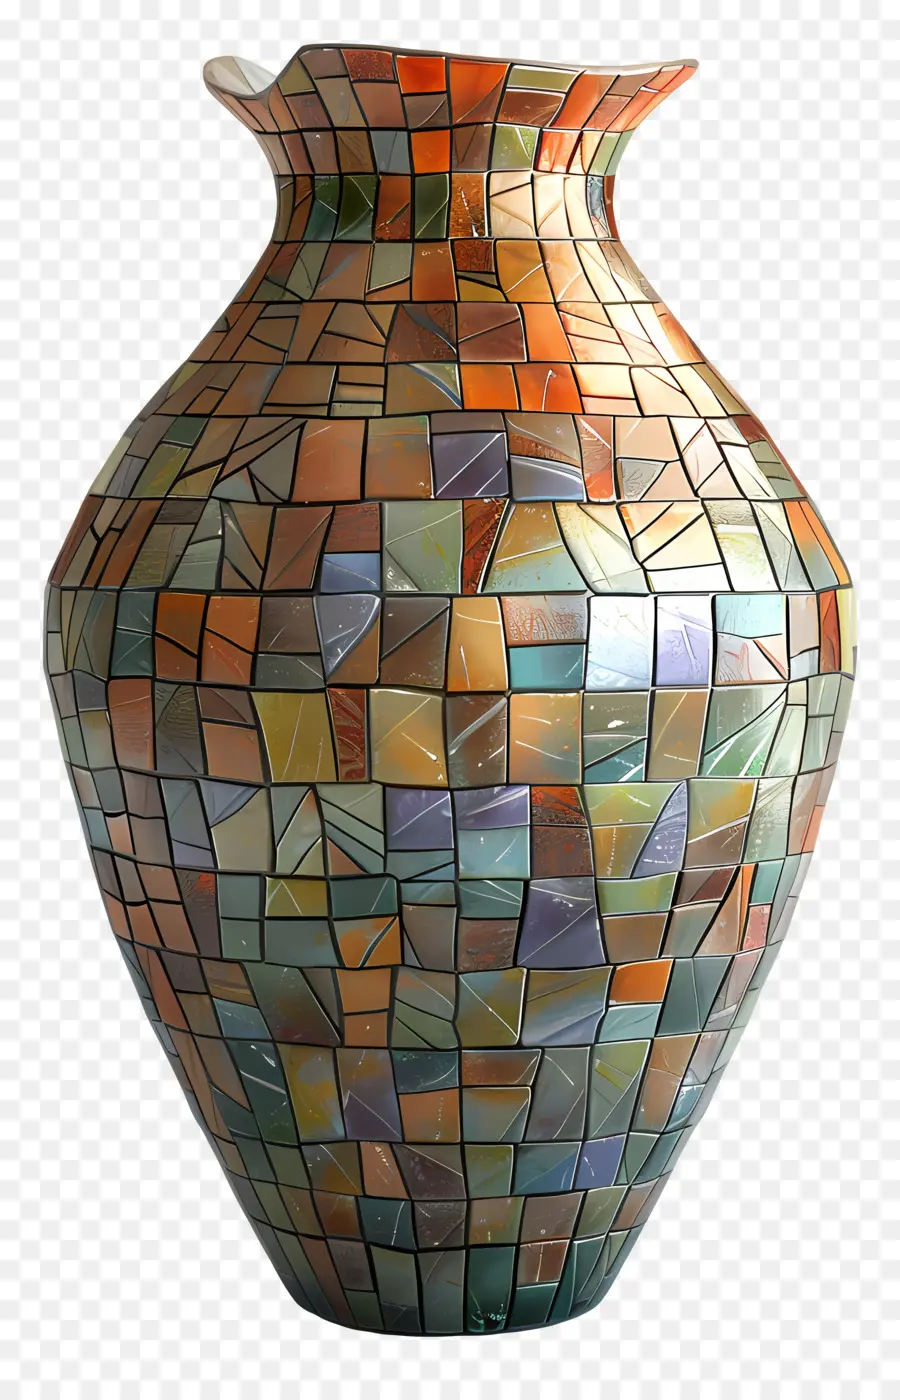 mosaic vase large ceramic vase mosaic tiles colorful patterns textured surface